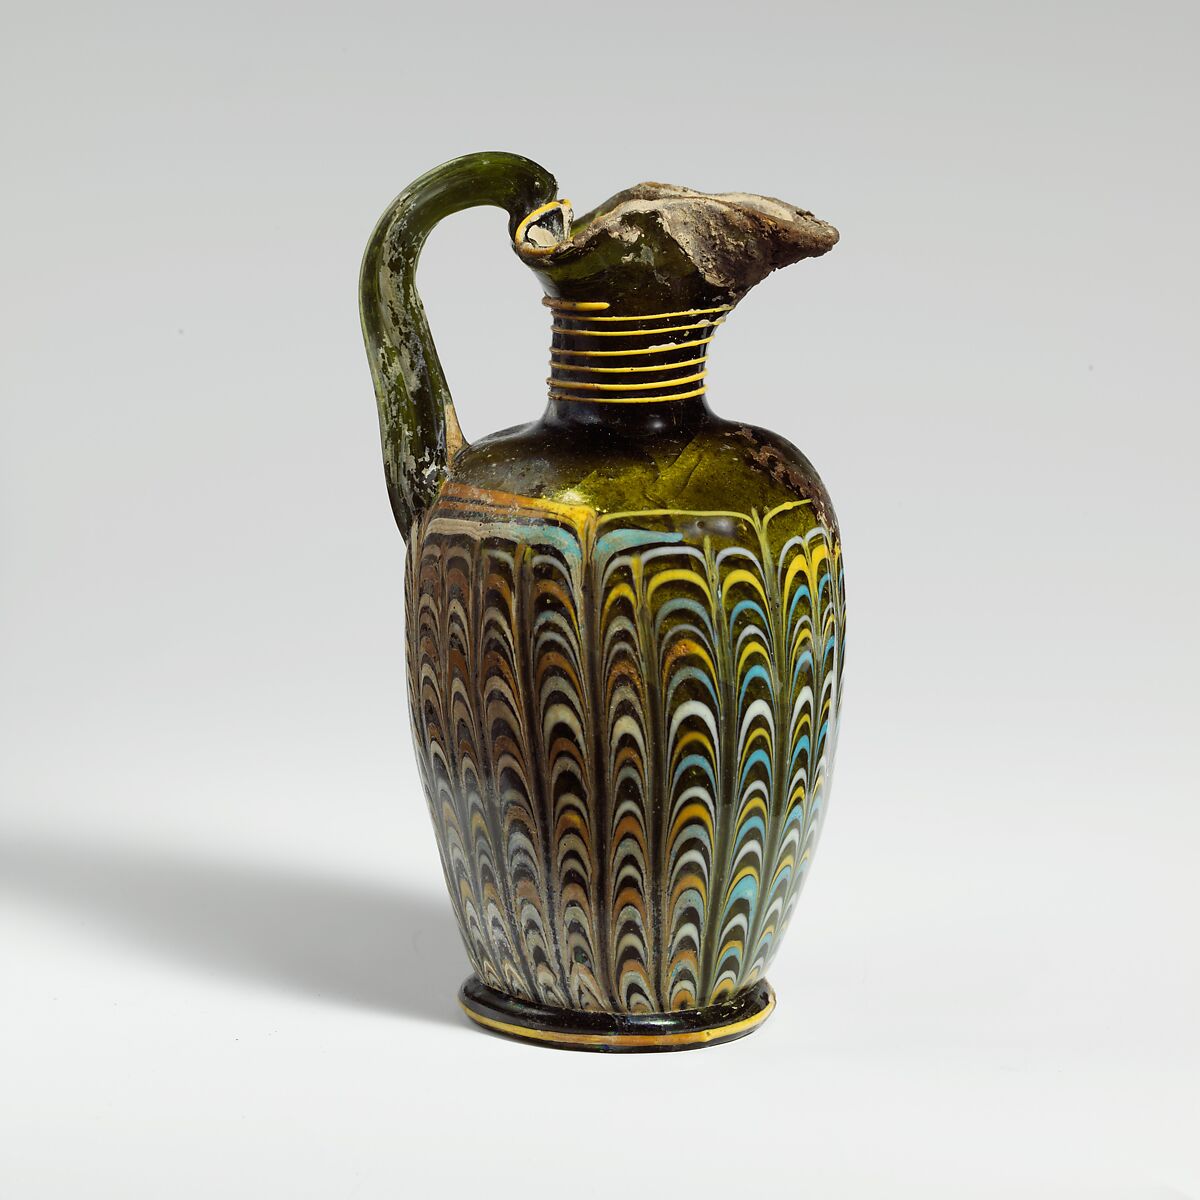 Glass oinochoe (perfume jug), Glass, Eastern Mediterranean or South Italian 